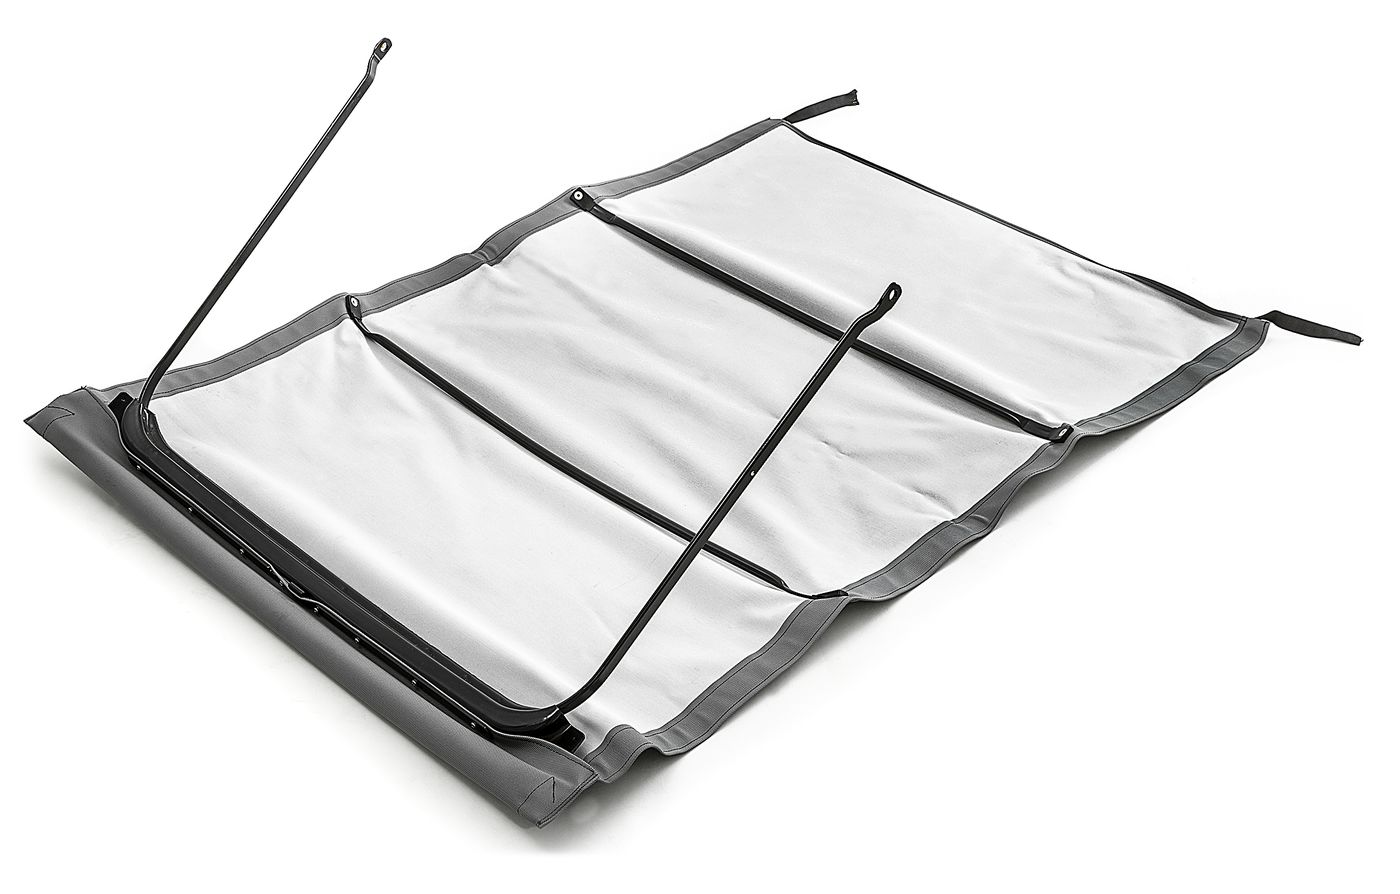 Faltdach
Sun roof kit
Toit à soufflet
Techo solar
Tetto pieghev